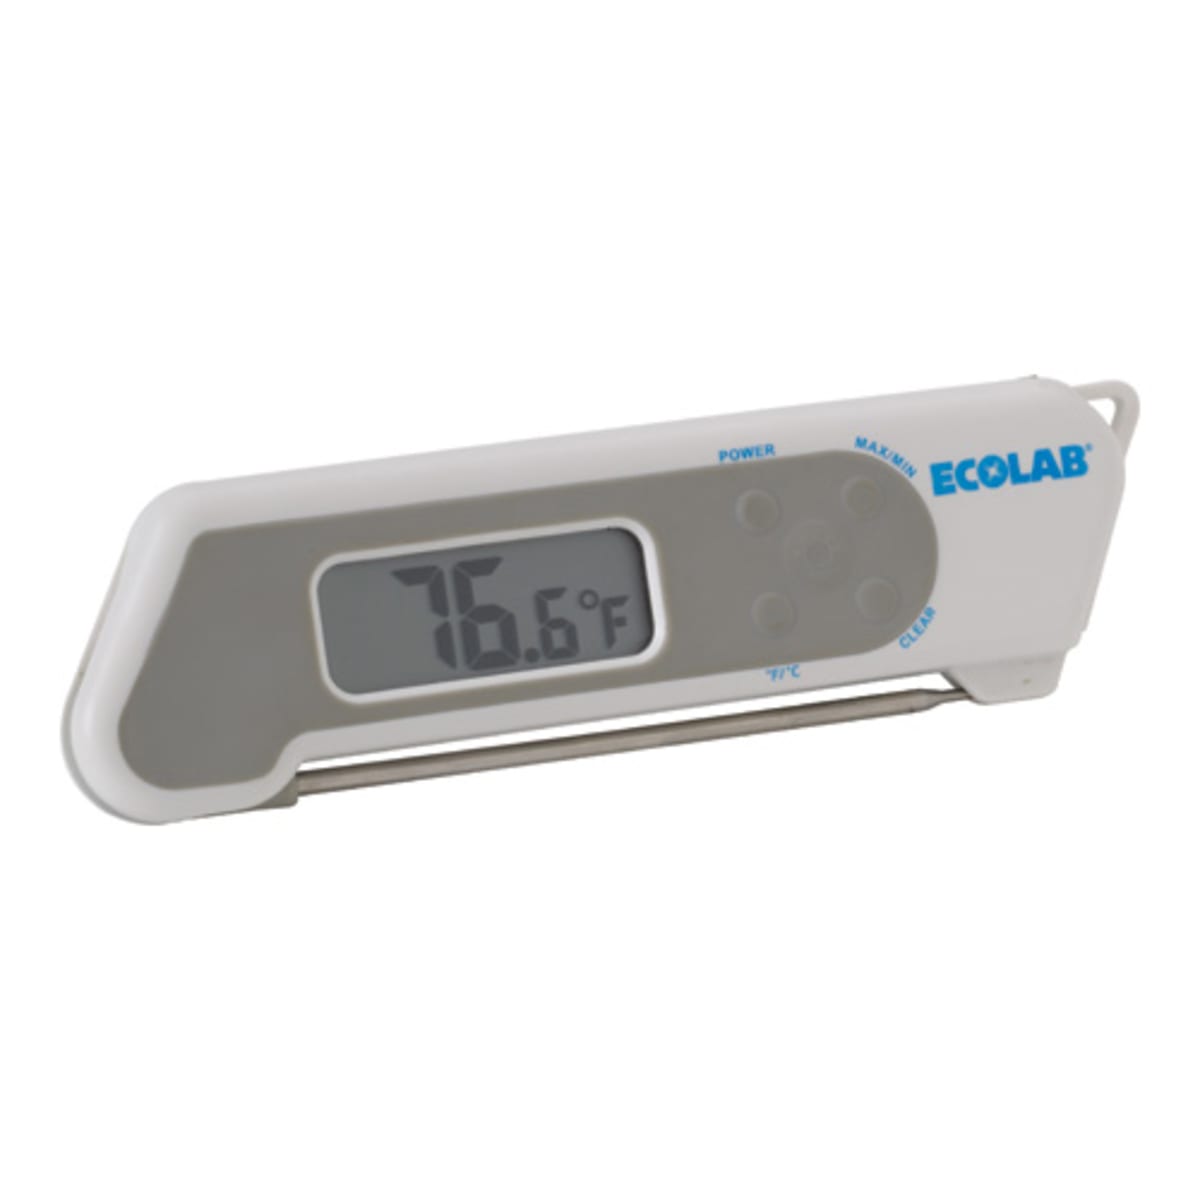 Ecolab Refrigerator/Freezer Thermometer